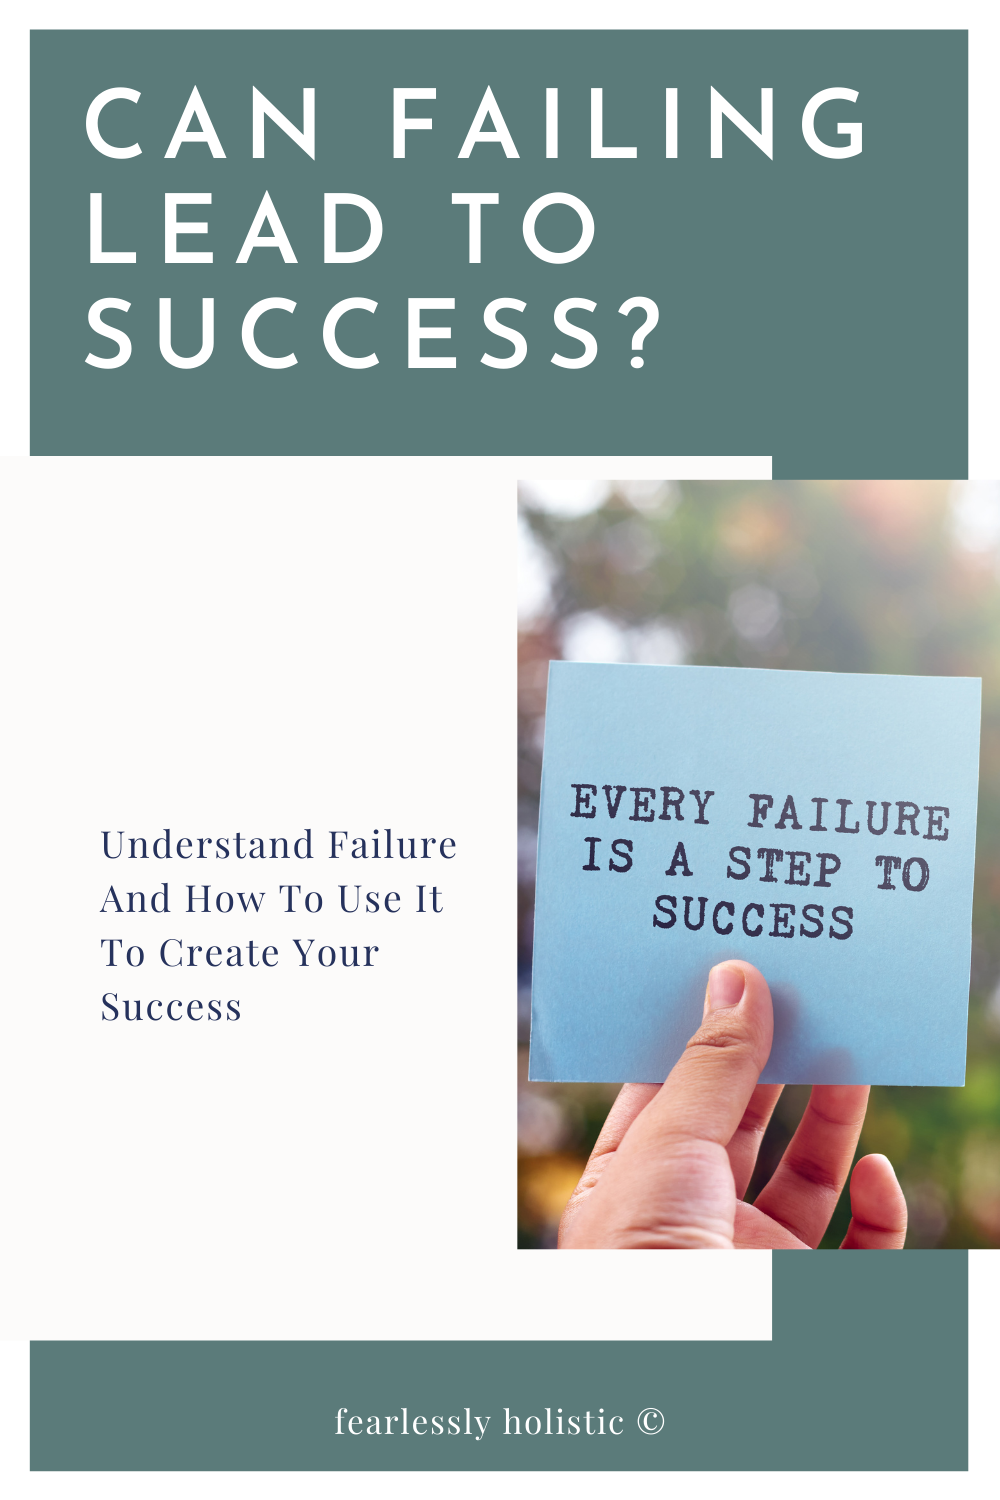 Can Failure Lead To Success?